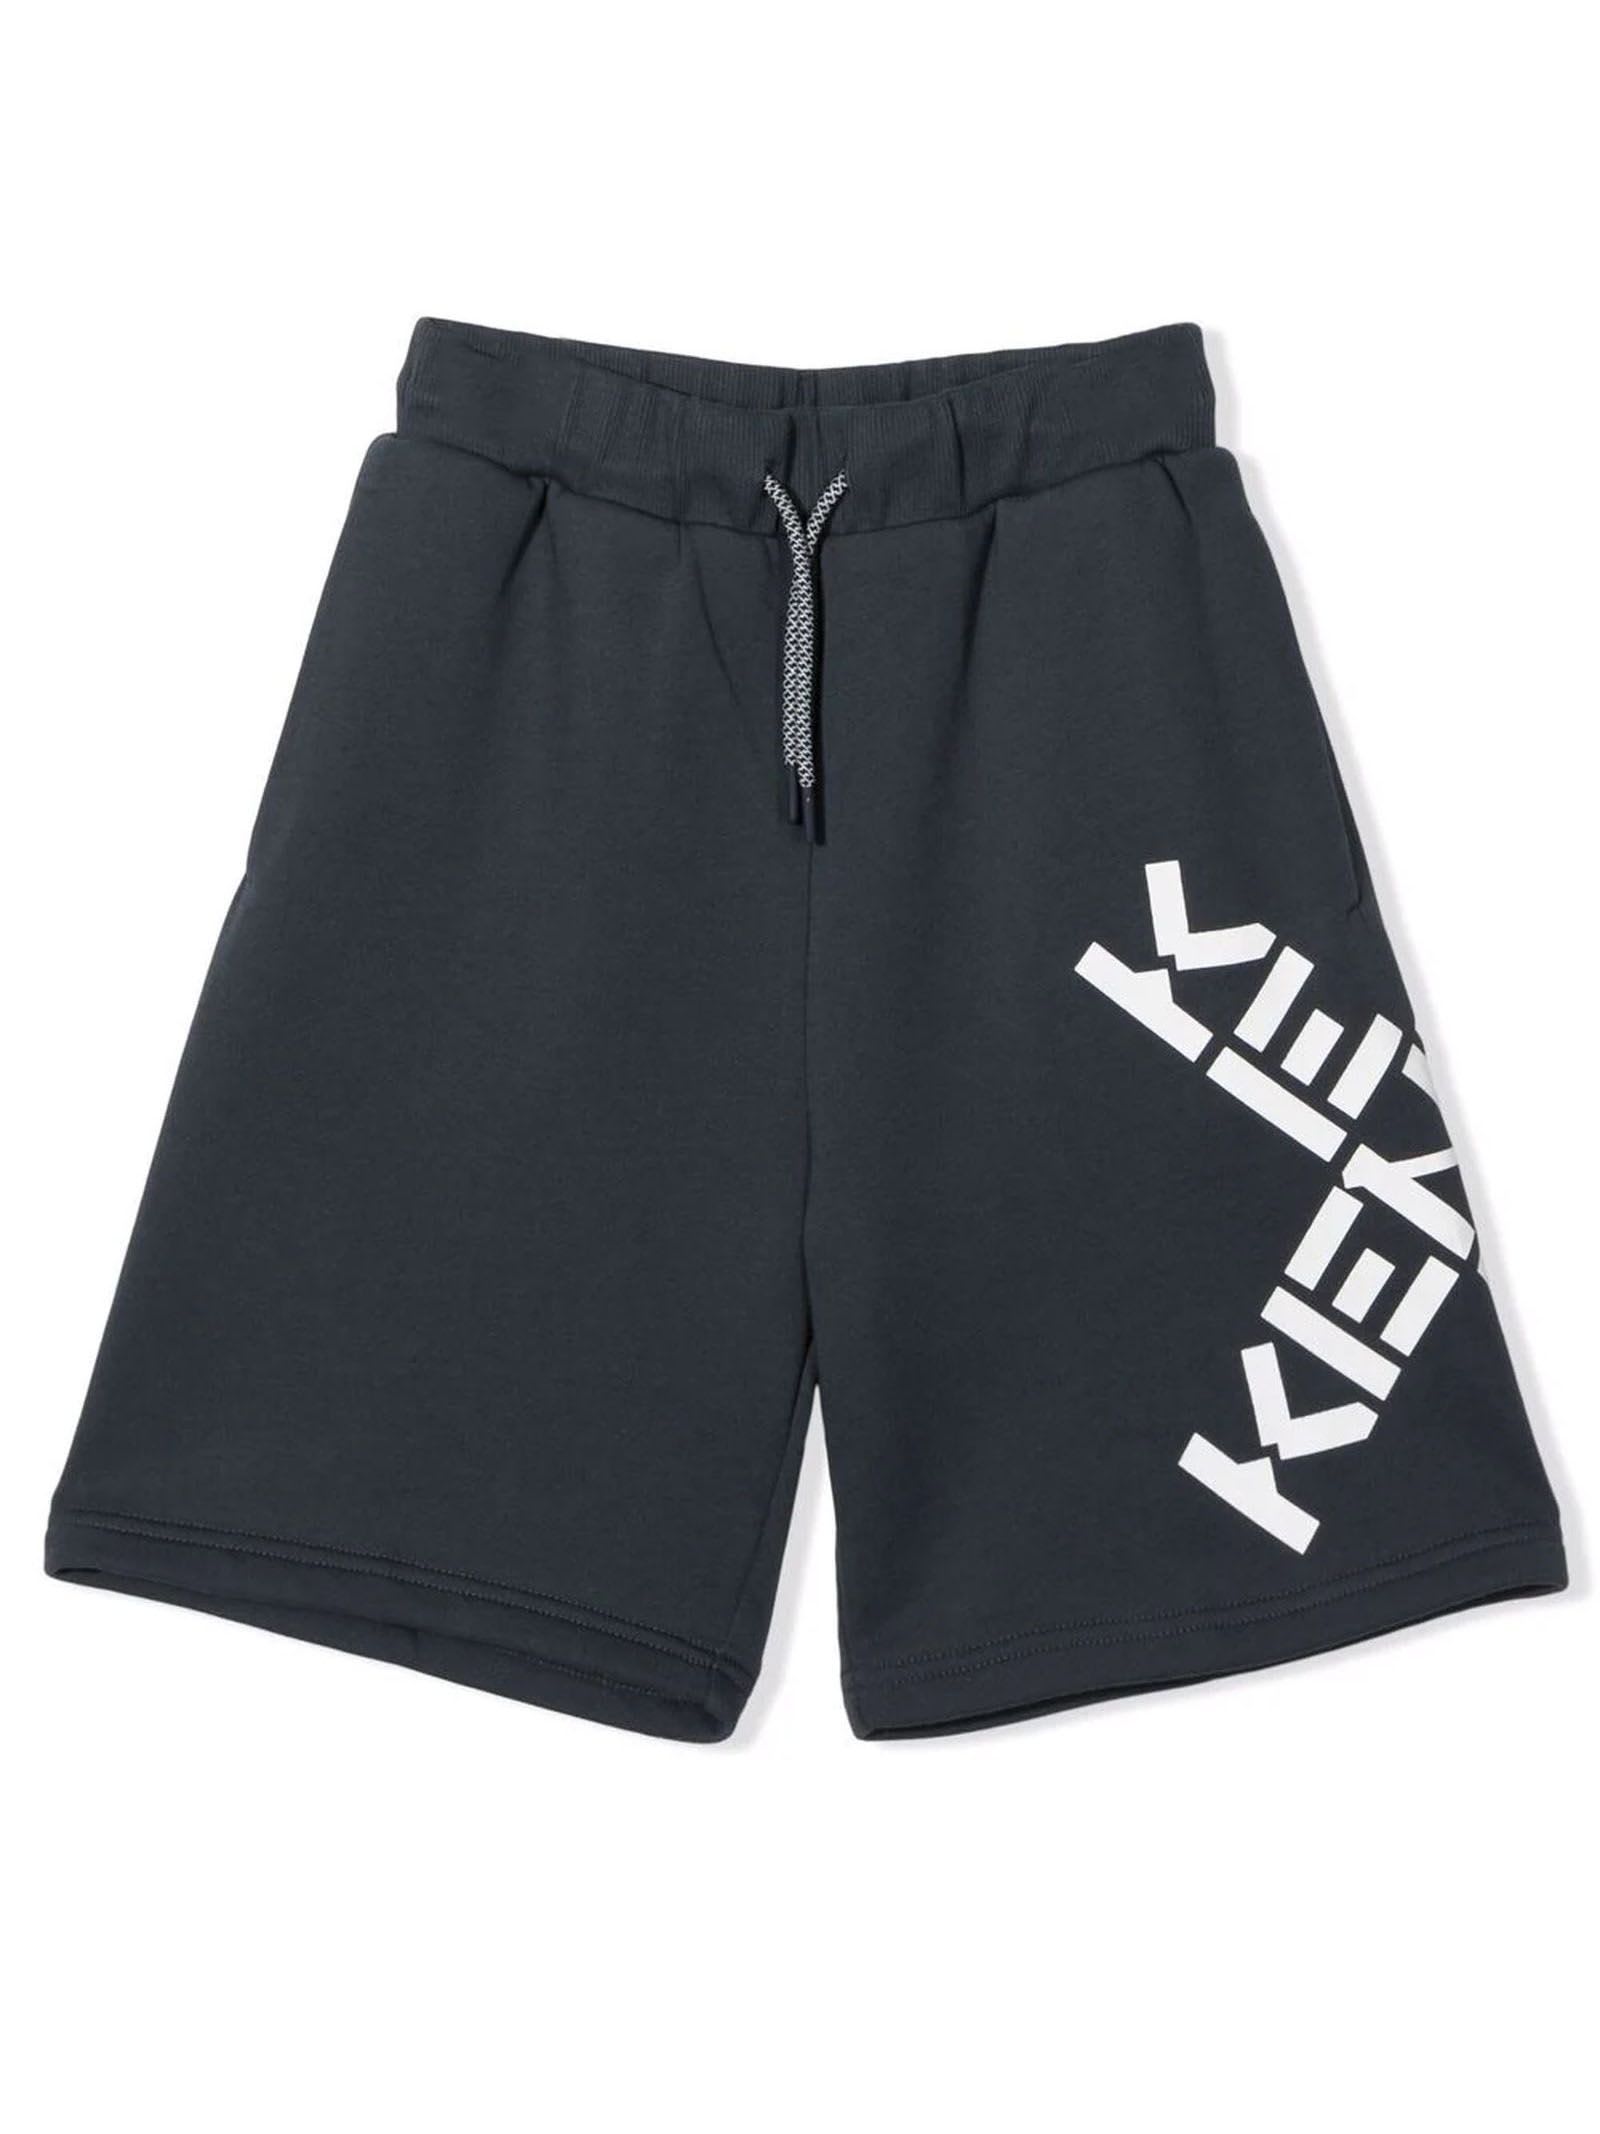 Kenzo Grey Cotton Shorts